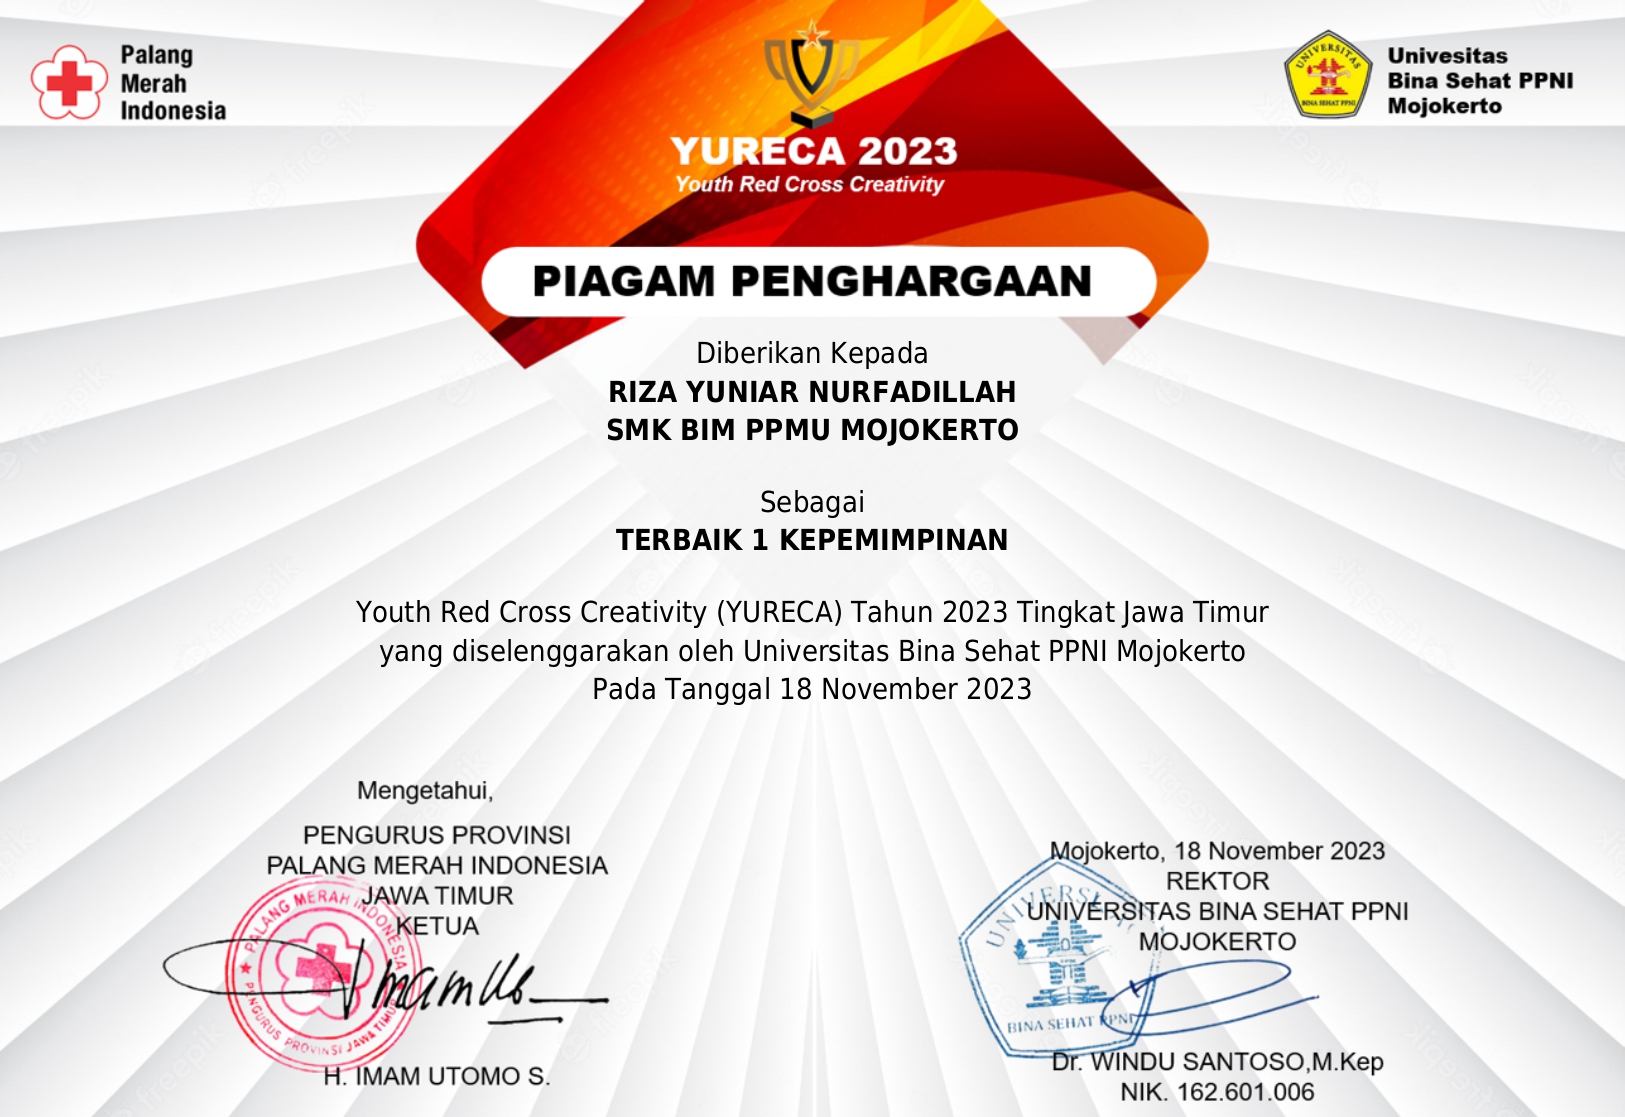 Juara 1 Kategori Kepemimpinan yang Youth Red Cross Creativity (YURECA) Tahun 2023 tingkat Jawa Timur yang diselenggarakan oleh Universias Bina Sehat PPNI Mojokerto Pada Tnggal 18 November 2023